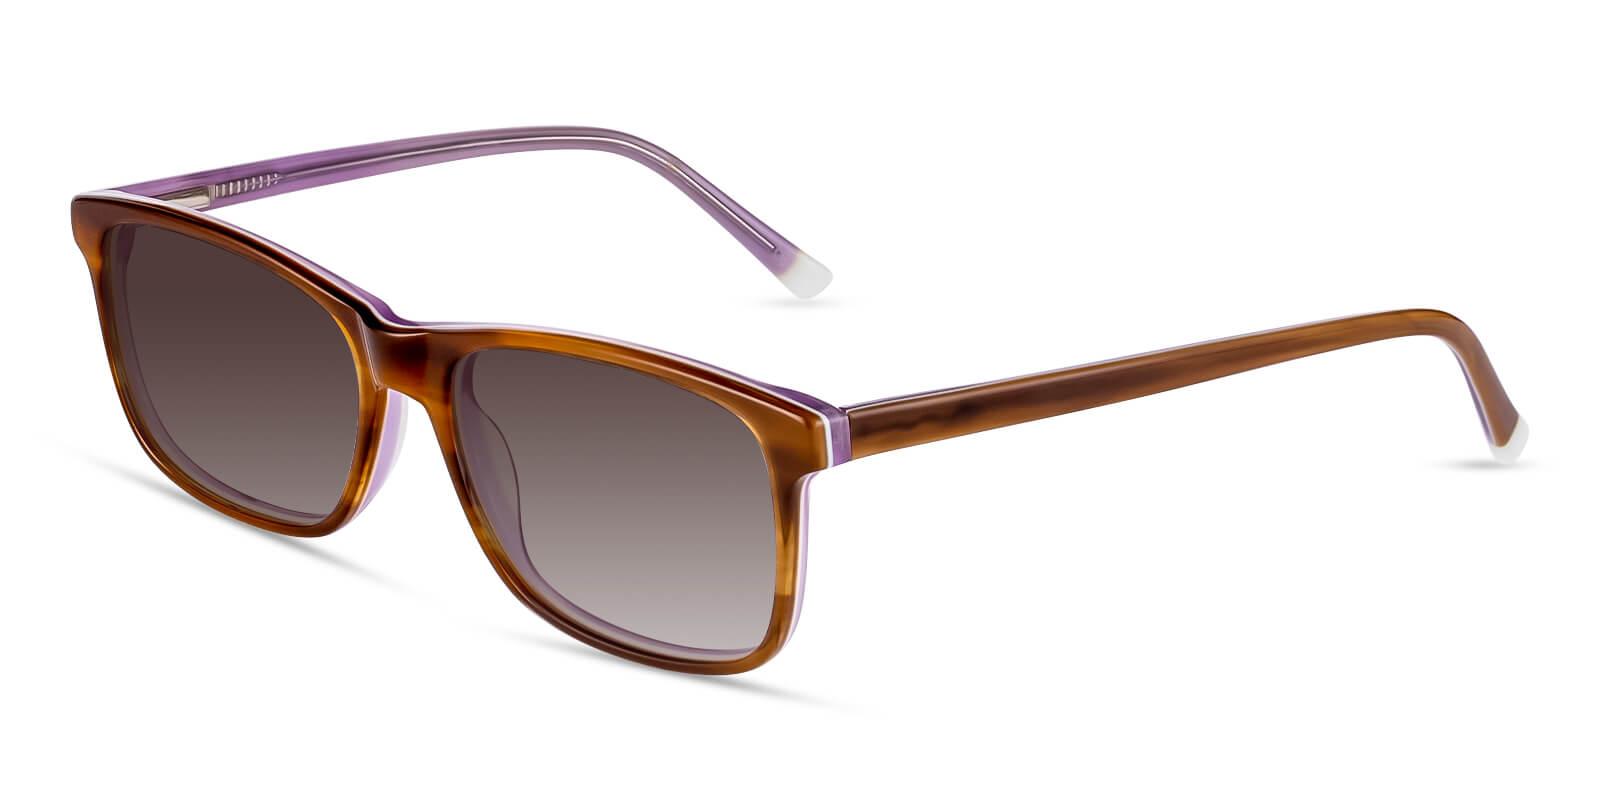 Candela Brown Acetate SpringHinges , Sunglasses , UniversalBridgeFit Frames from ABBE Glasses